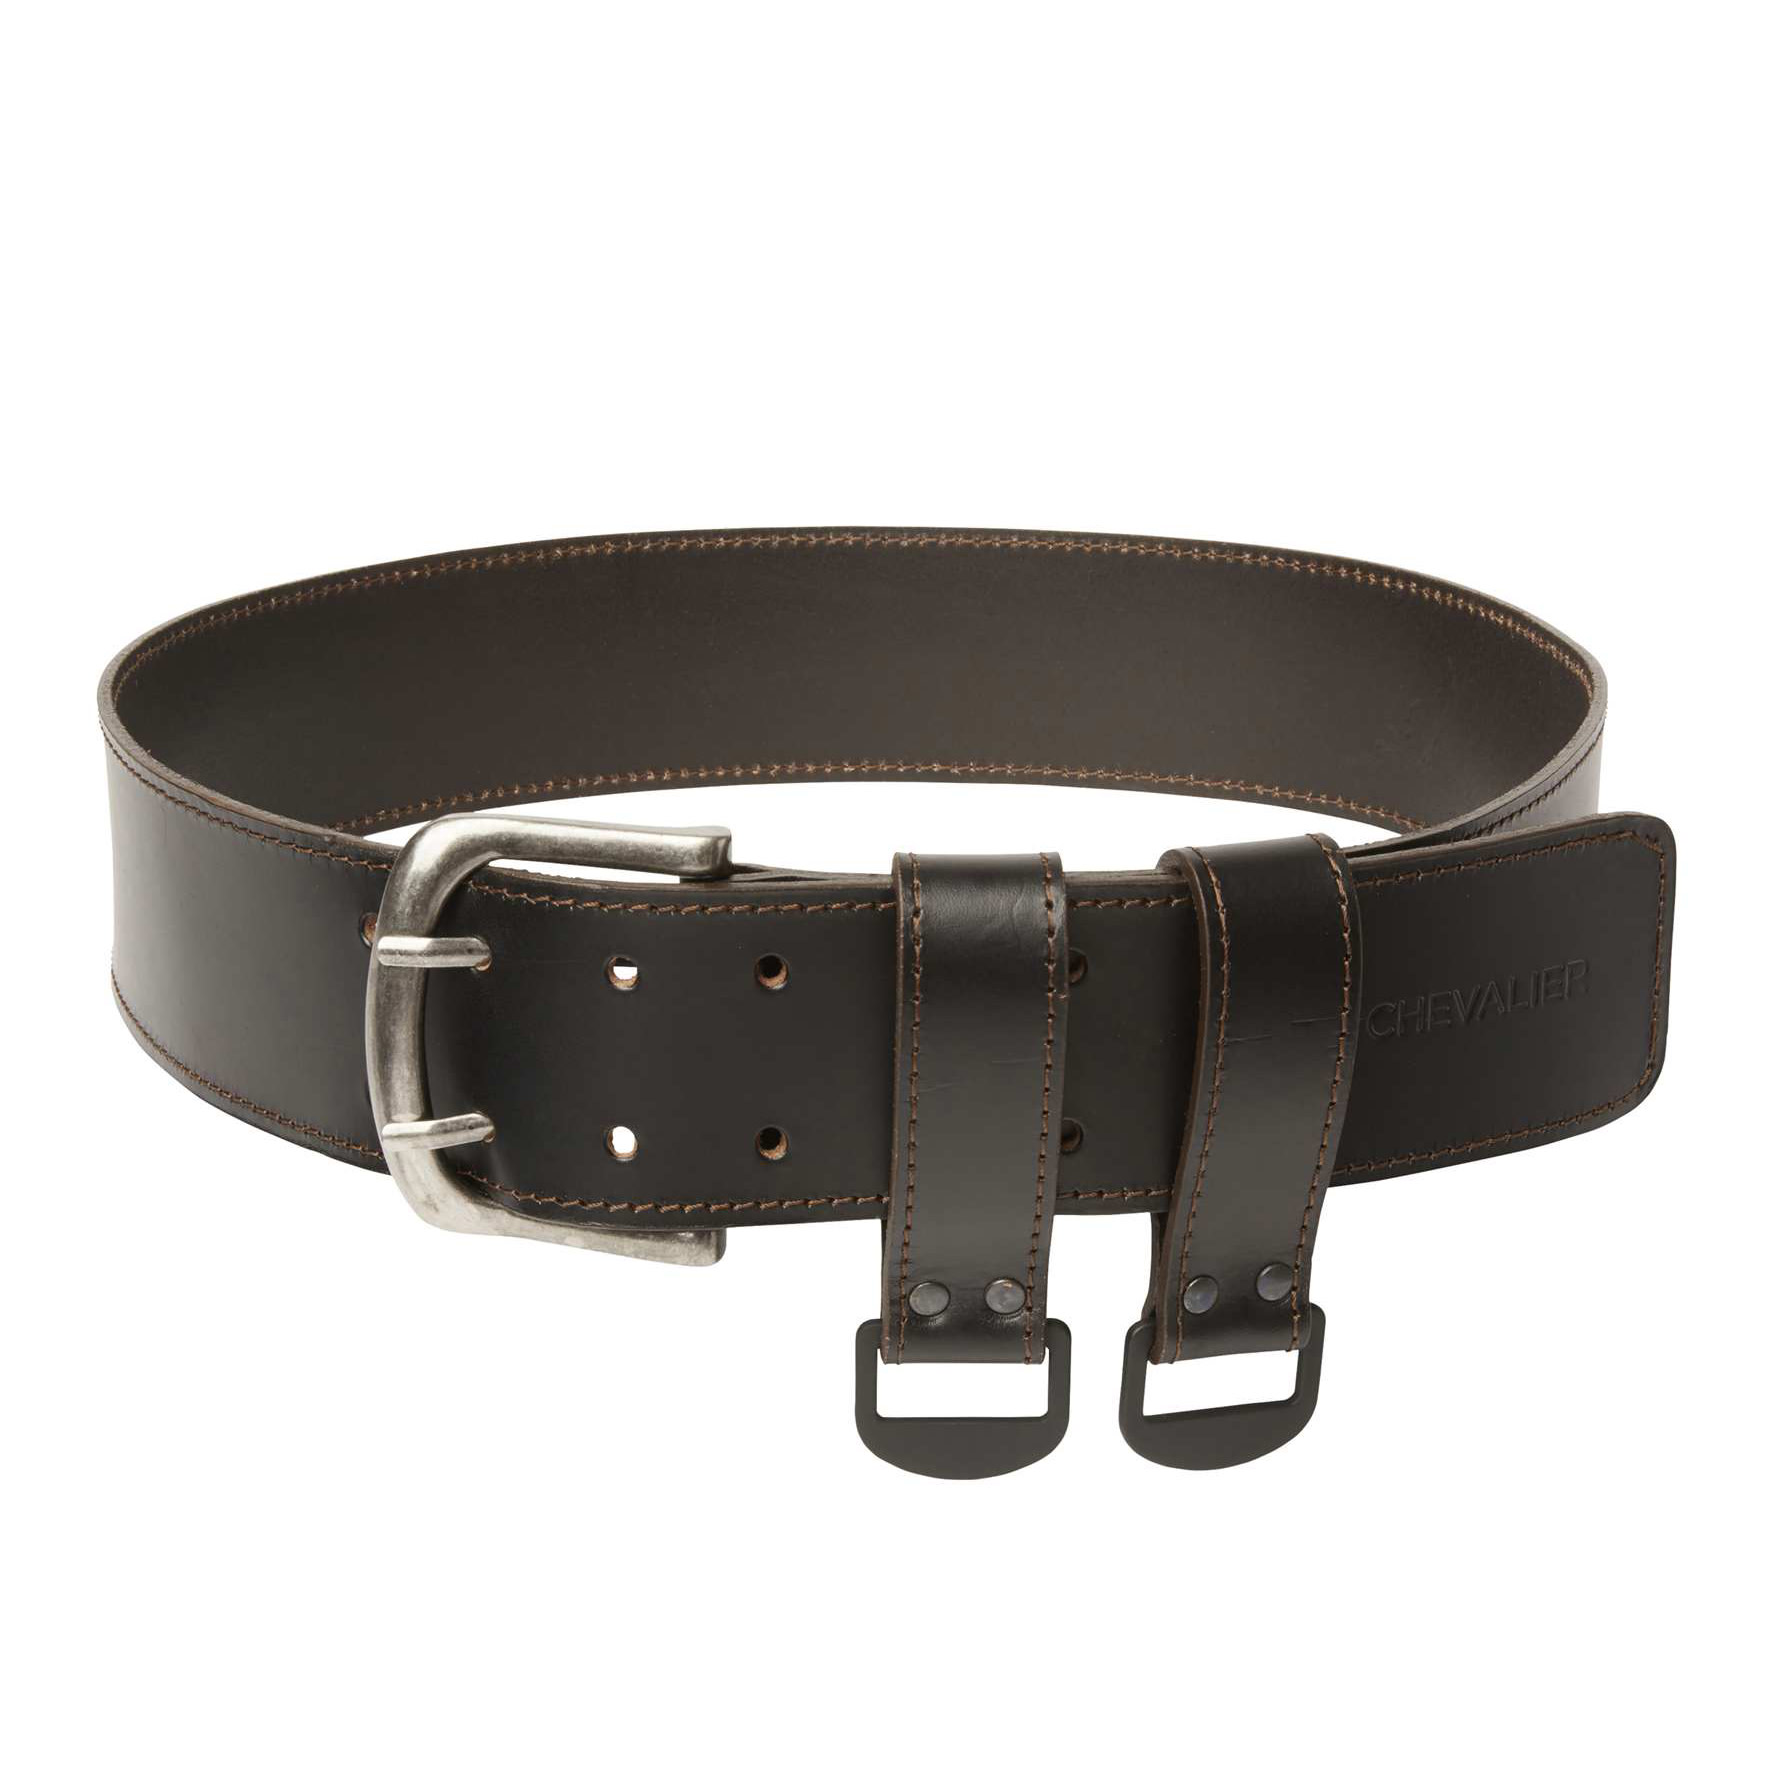 Doghandler Leather Belt Leather Brown